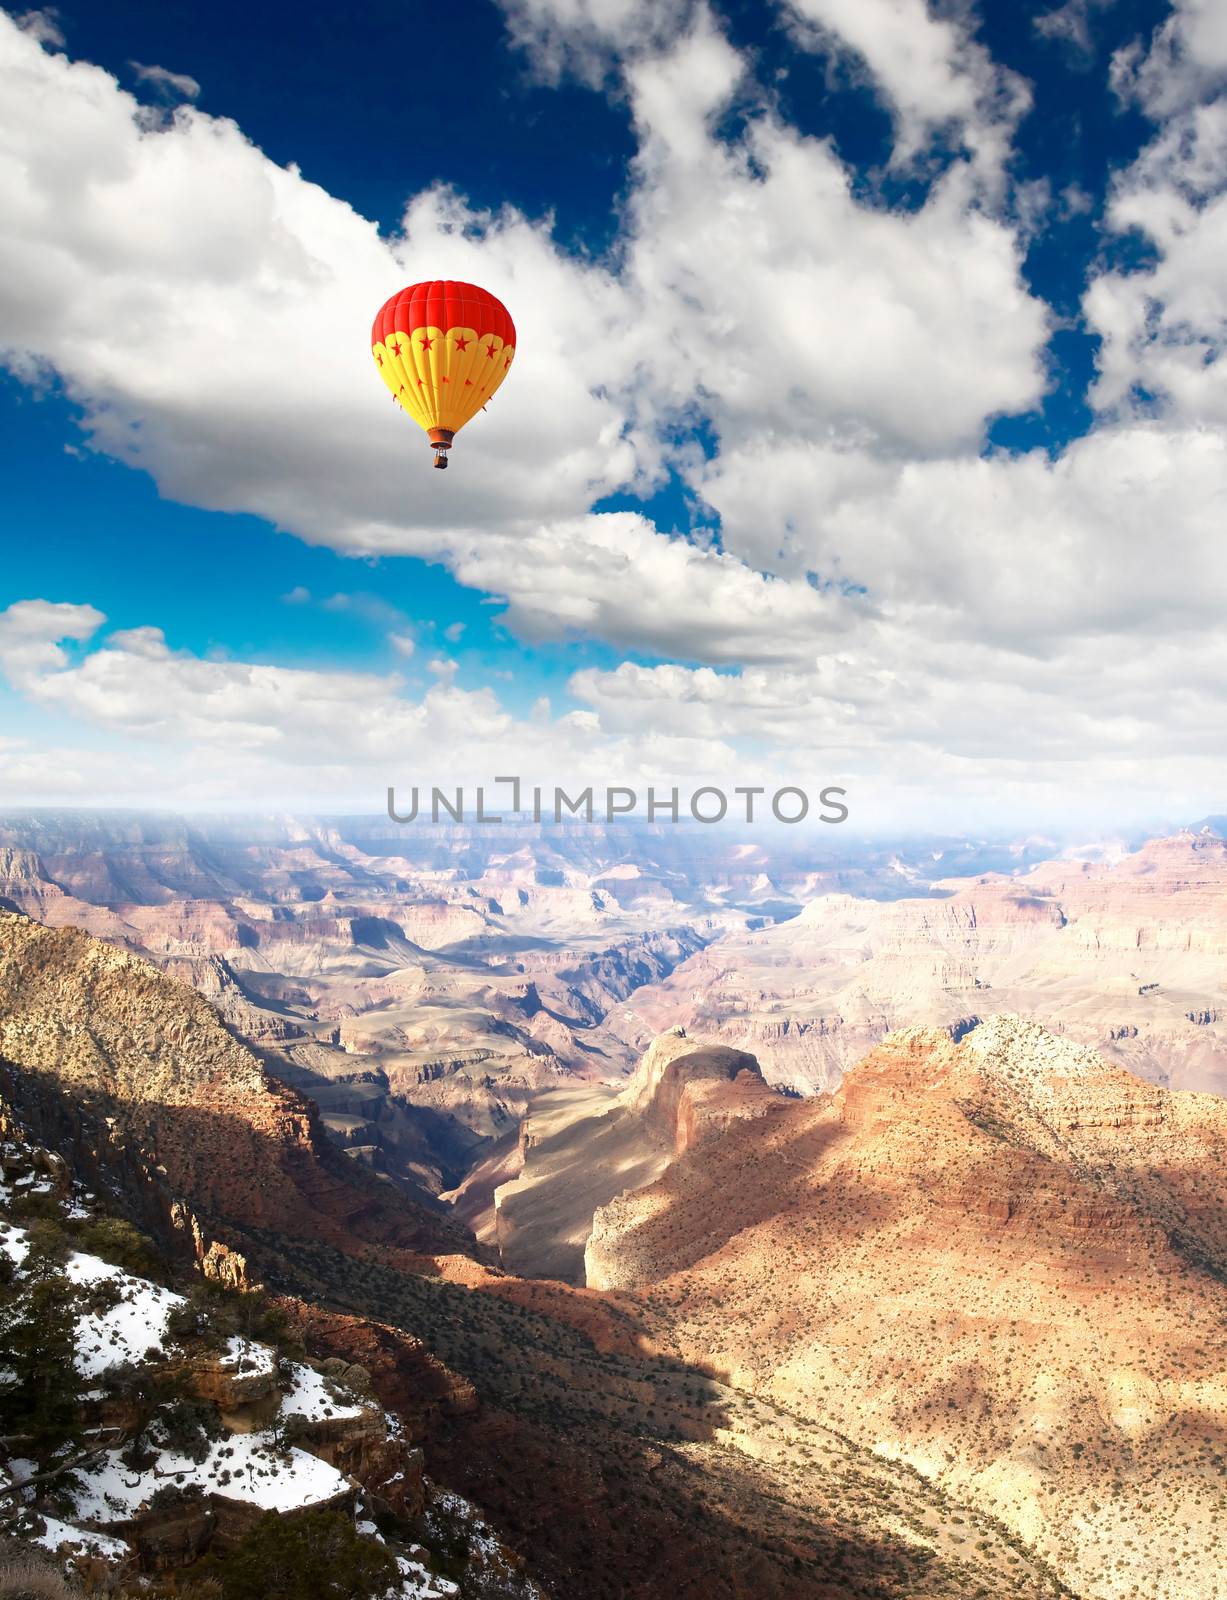 Grand Canyon National Park in Arizona, USA   